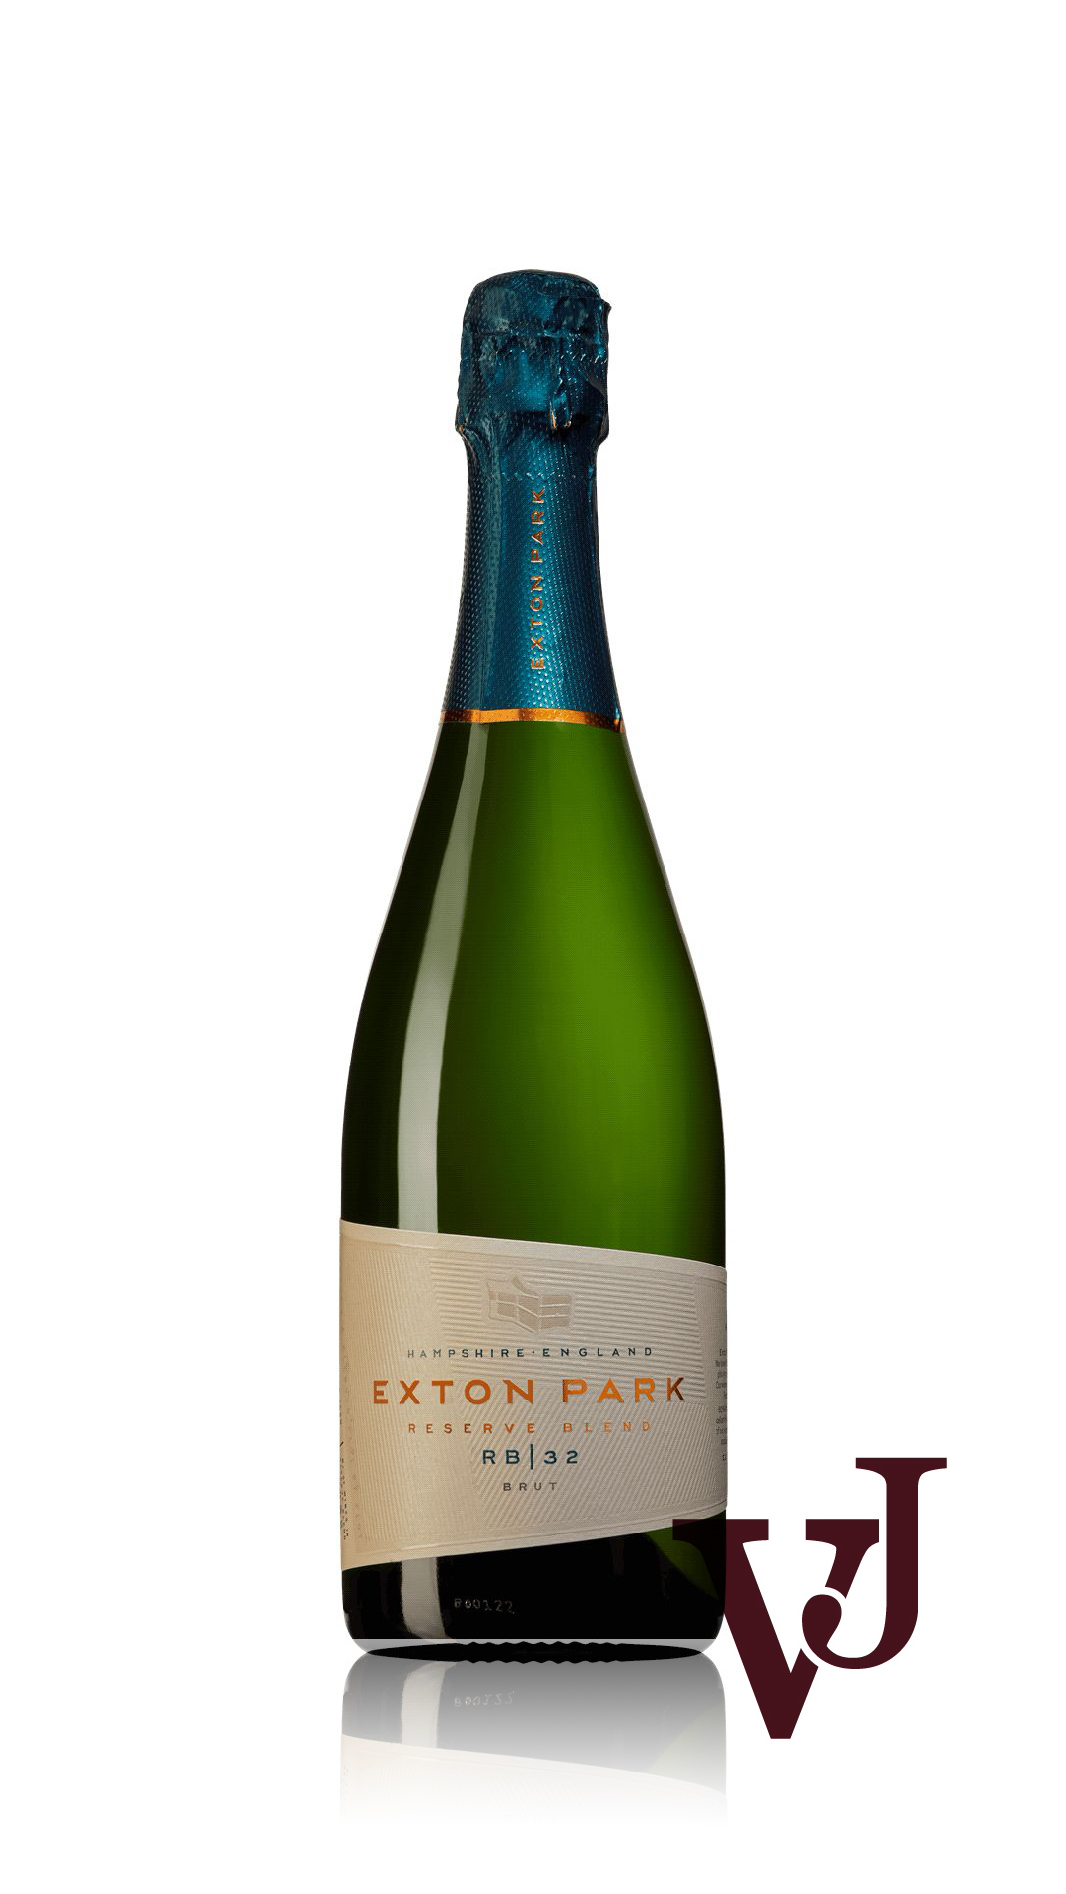 Mousserande Vin - Exton Park Reserve Blend RB 32 Brut artikel nummer 9508501 från producenten Exton Park från området Storbritannien